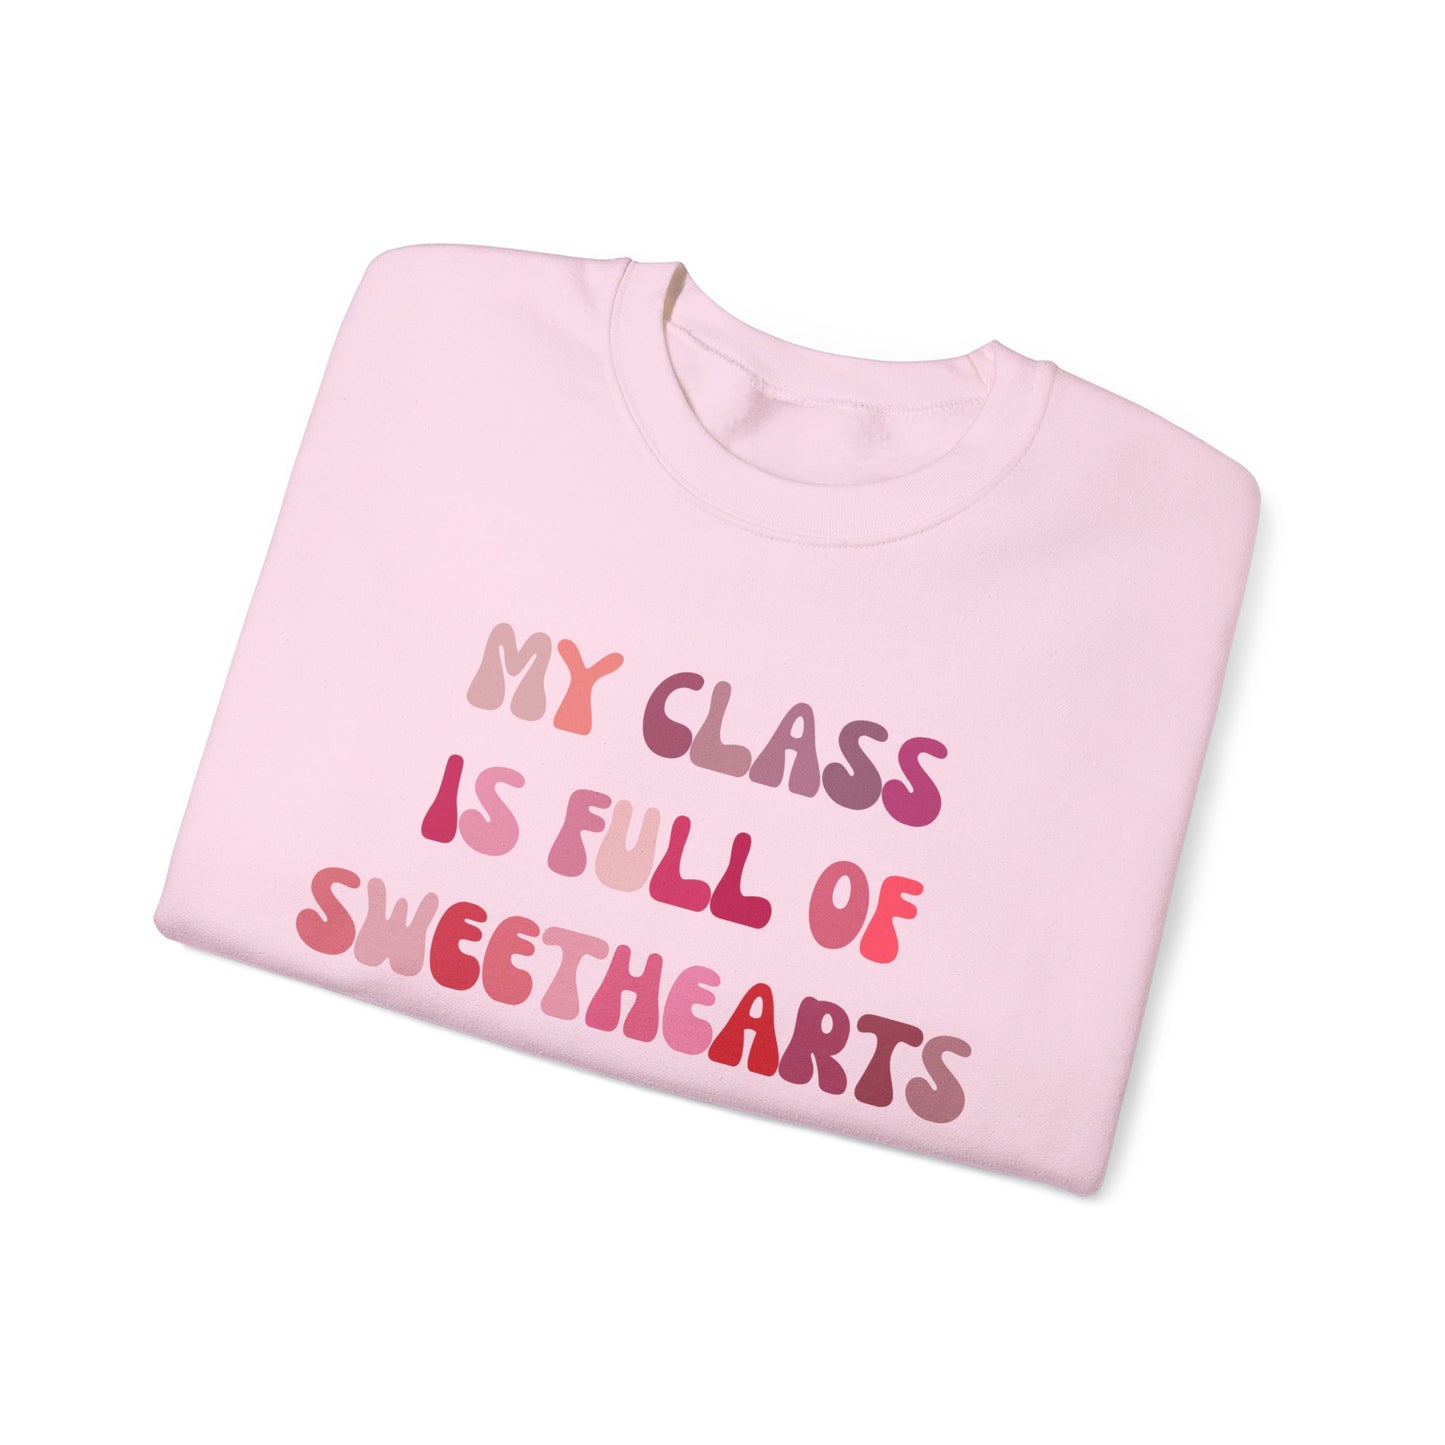 My Class Is Full Of Sweethearts Sweatshirt Valentines Day Teacher Sweatshirt, Teacher Love Heart Sweatshirt, Teacher Valentines Gift, SW1277